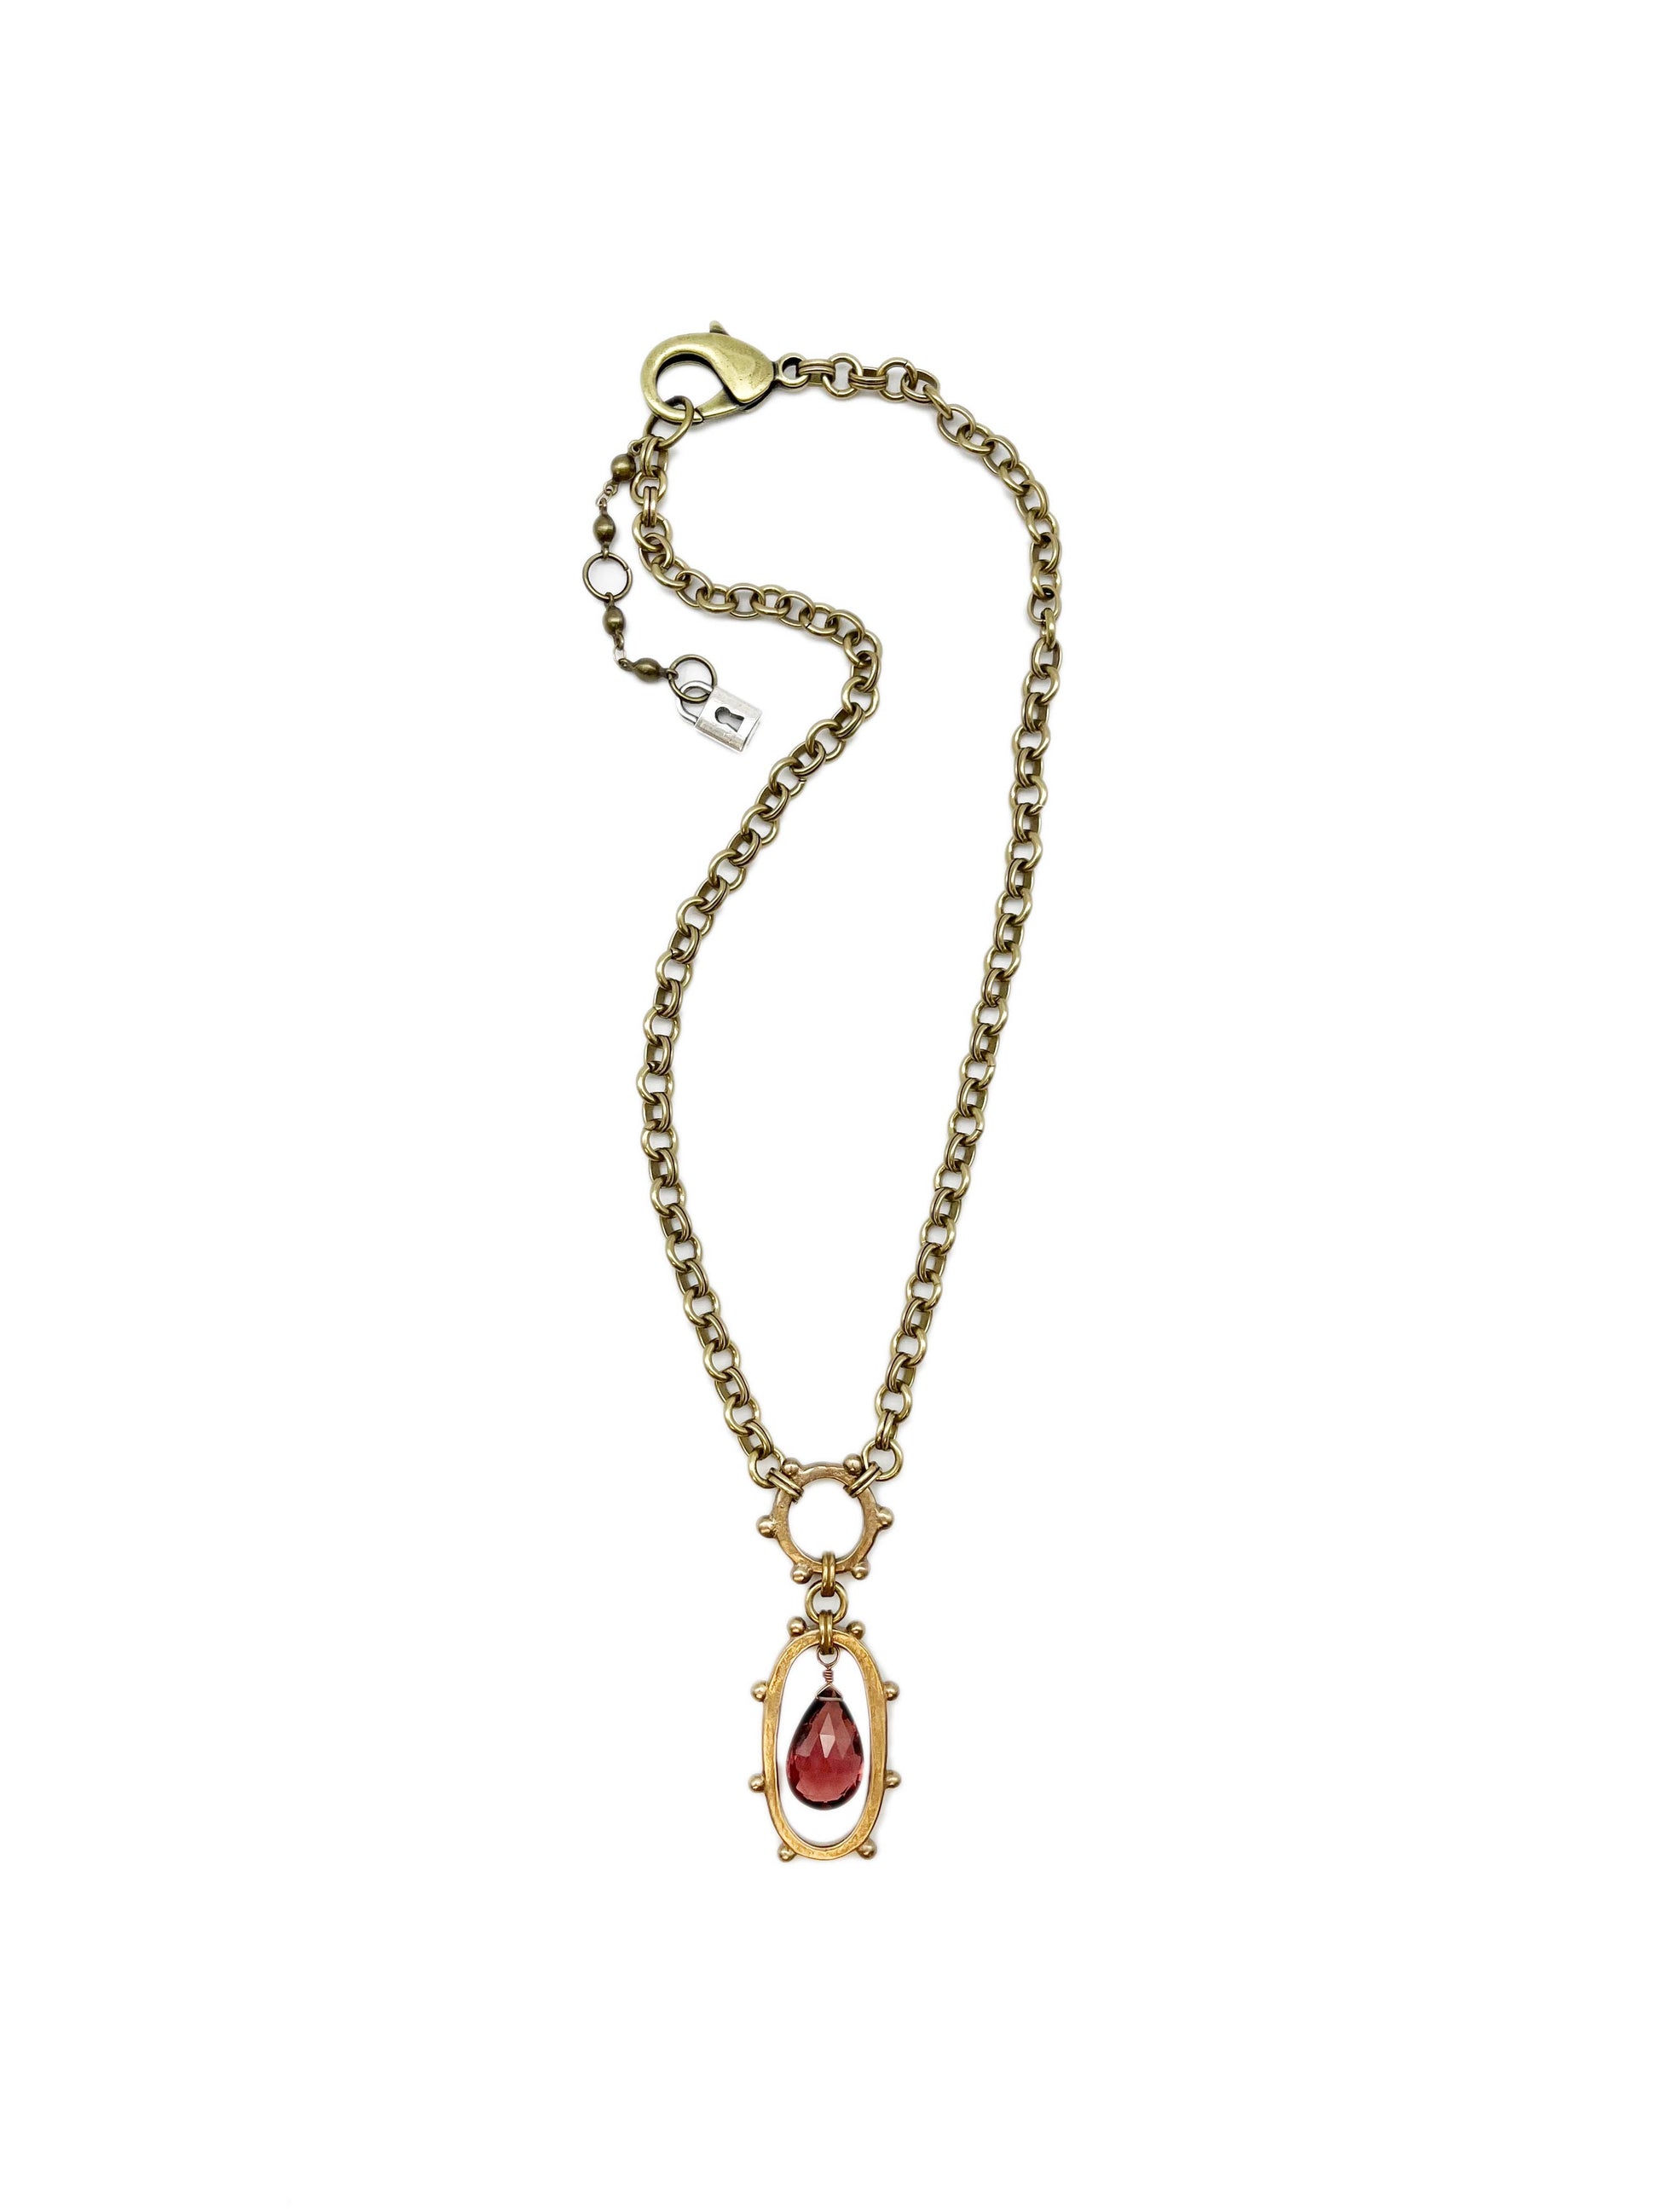 Granulated O-Ring Double link necklace, gemstone drop - La De Da